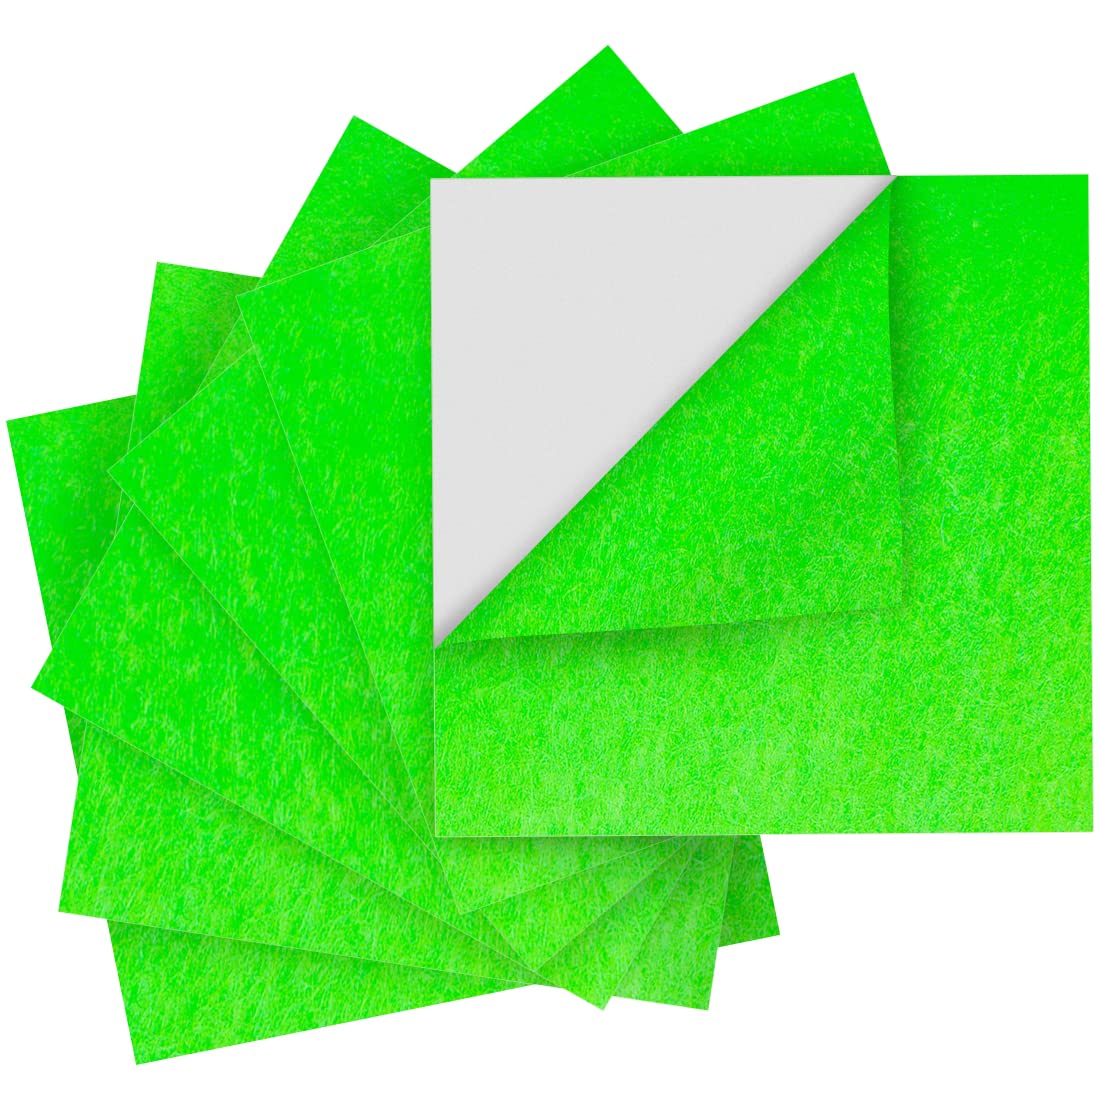 Iooleem Light Green Felt Sheets, Self-Adhesive Felt Sheets, 90Pcs 4X4 (10Cmx10Cm),Pre-Cut Felt Sheets For Crafts, Craft Felt Fab